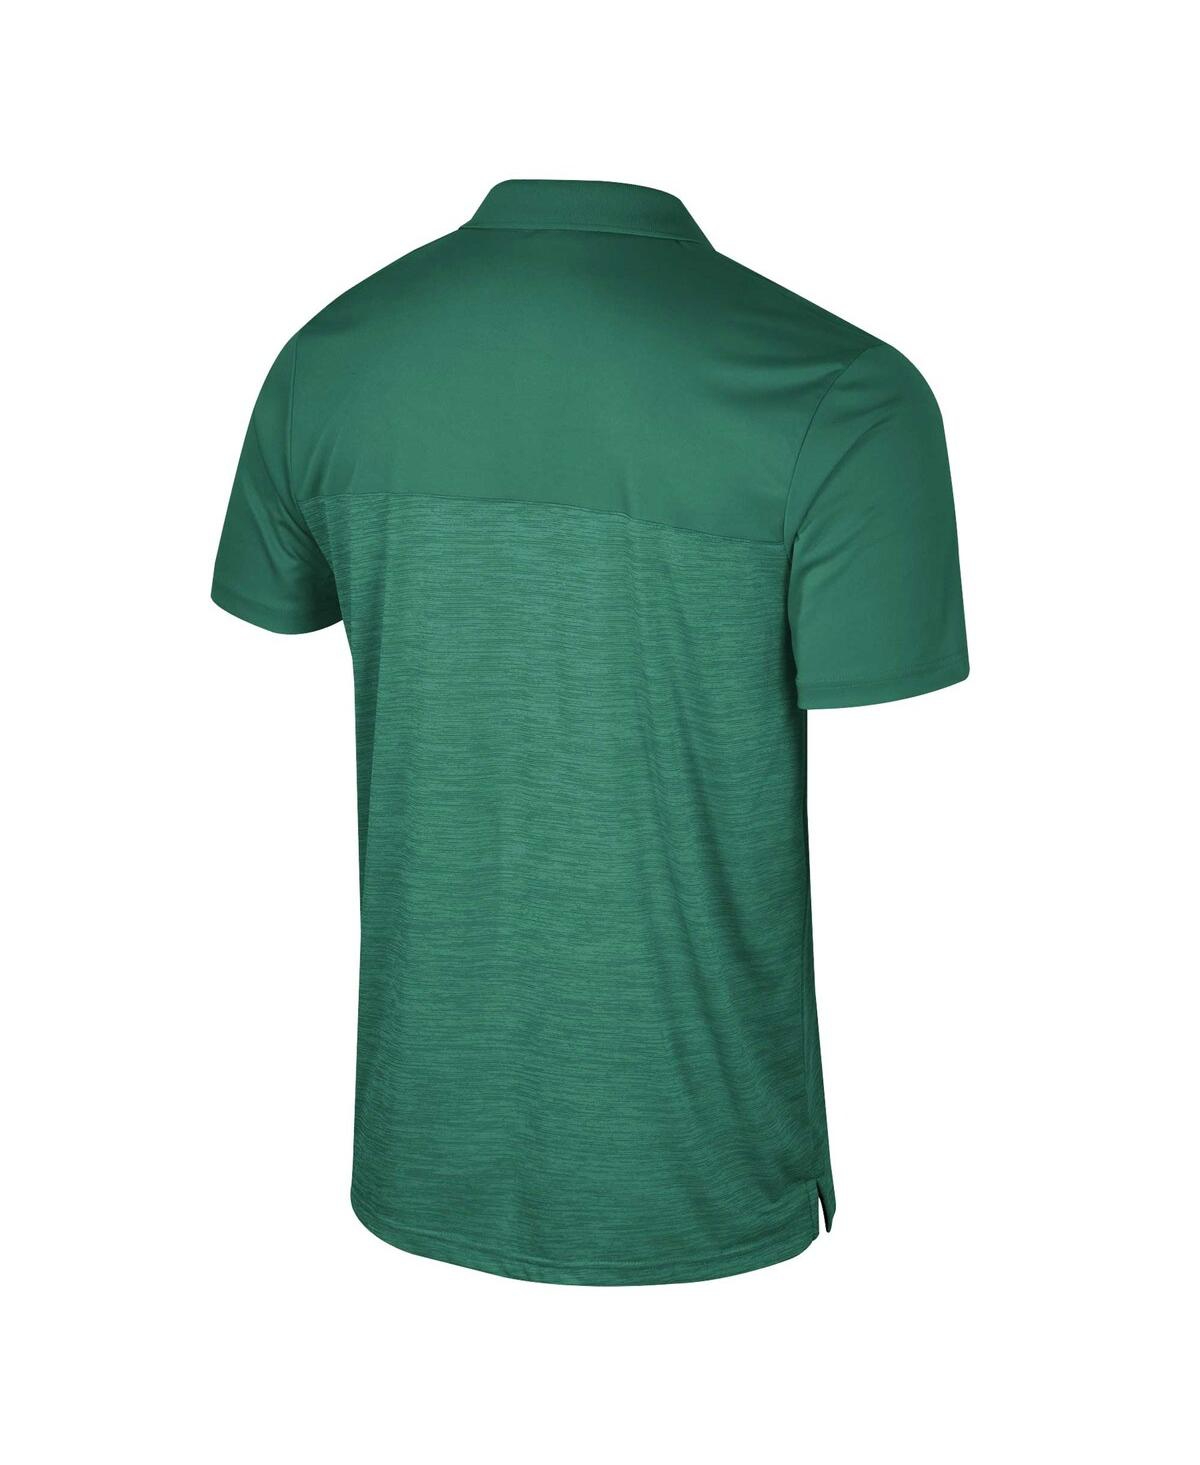 Shop Colosseum Men's  Green Colorado State Rams Langmore Polo Shirt